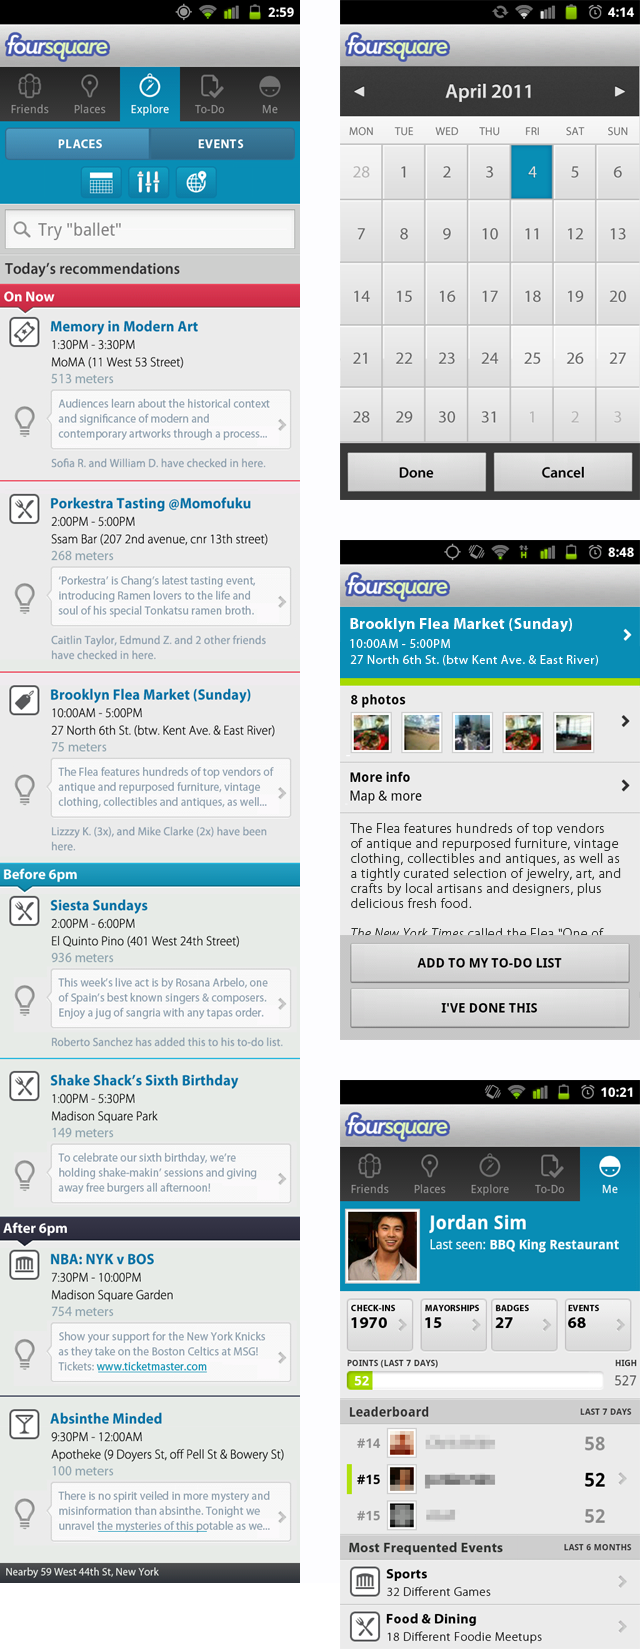 Foursquare Explore Feature - Designed by Jordan Sim